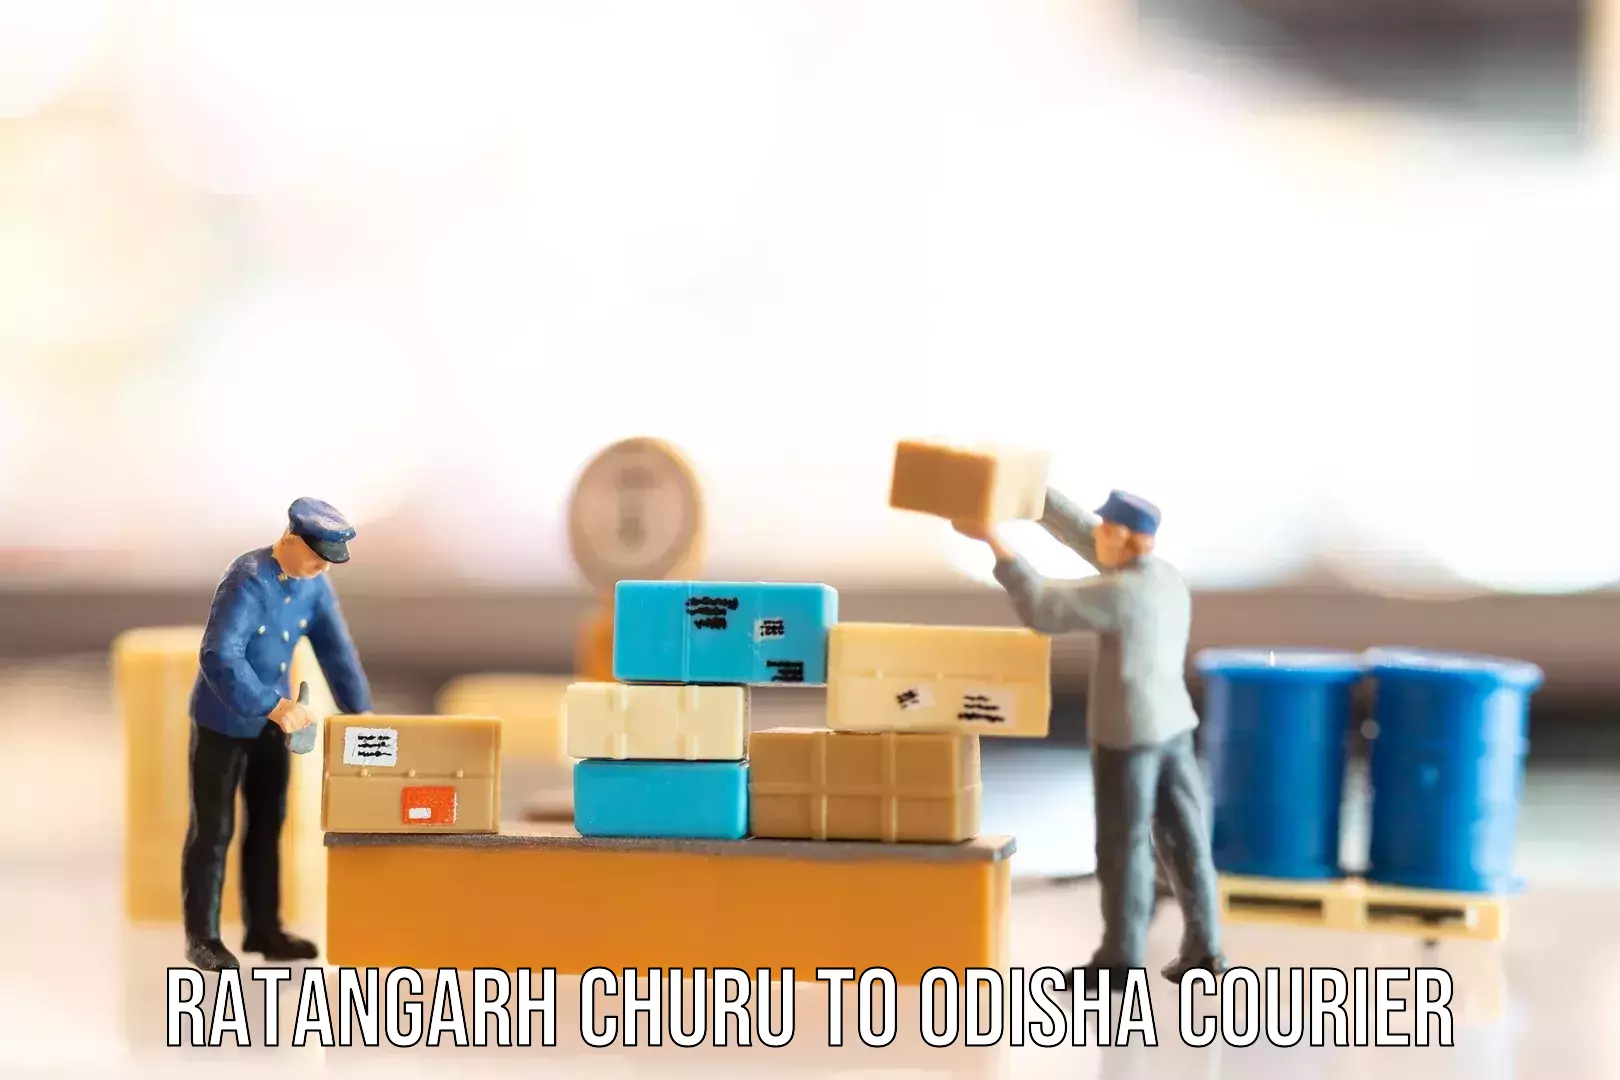 Luggage delivery app Ratangarh Churu to Sinapali